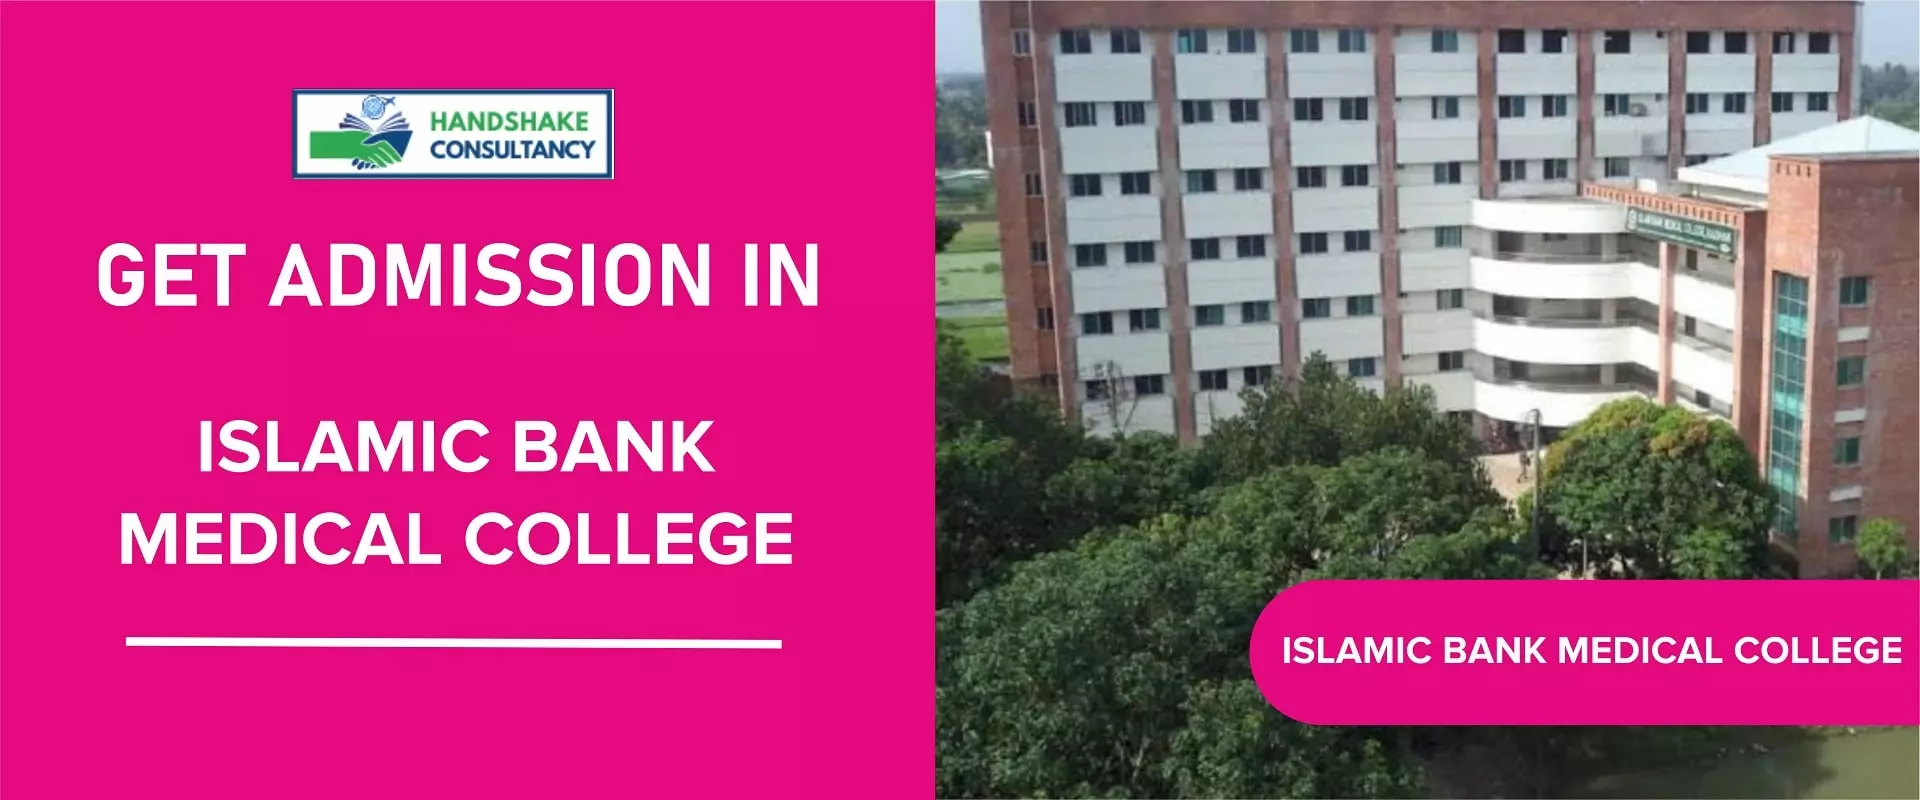 Islamic Bank Medical College, Bangladesh